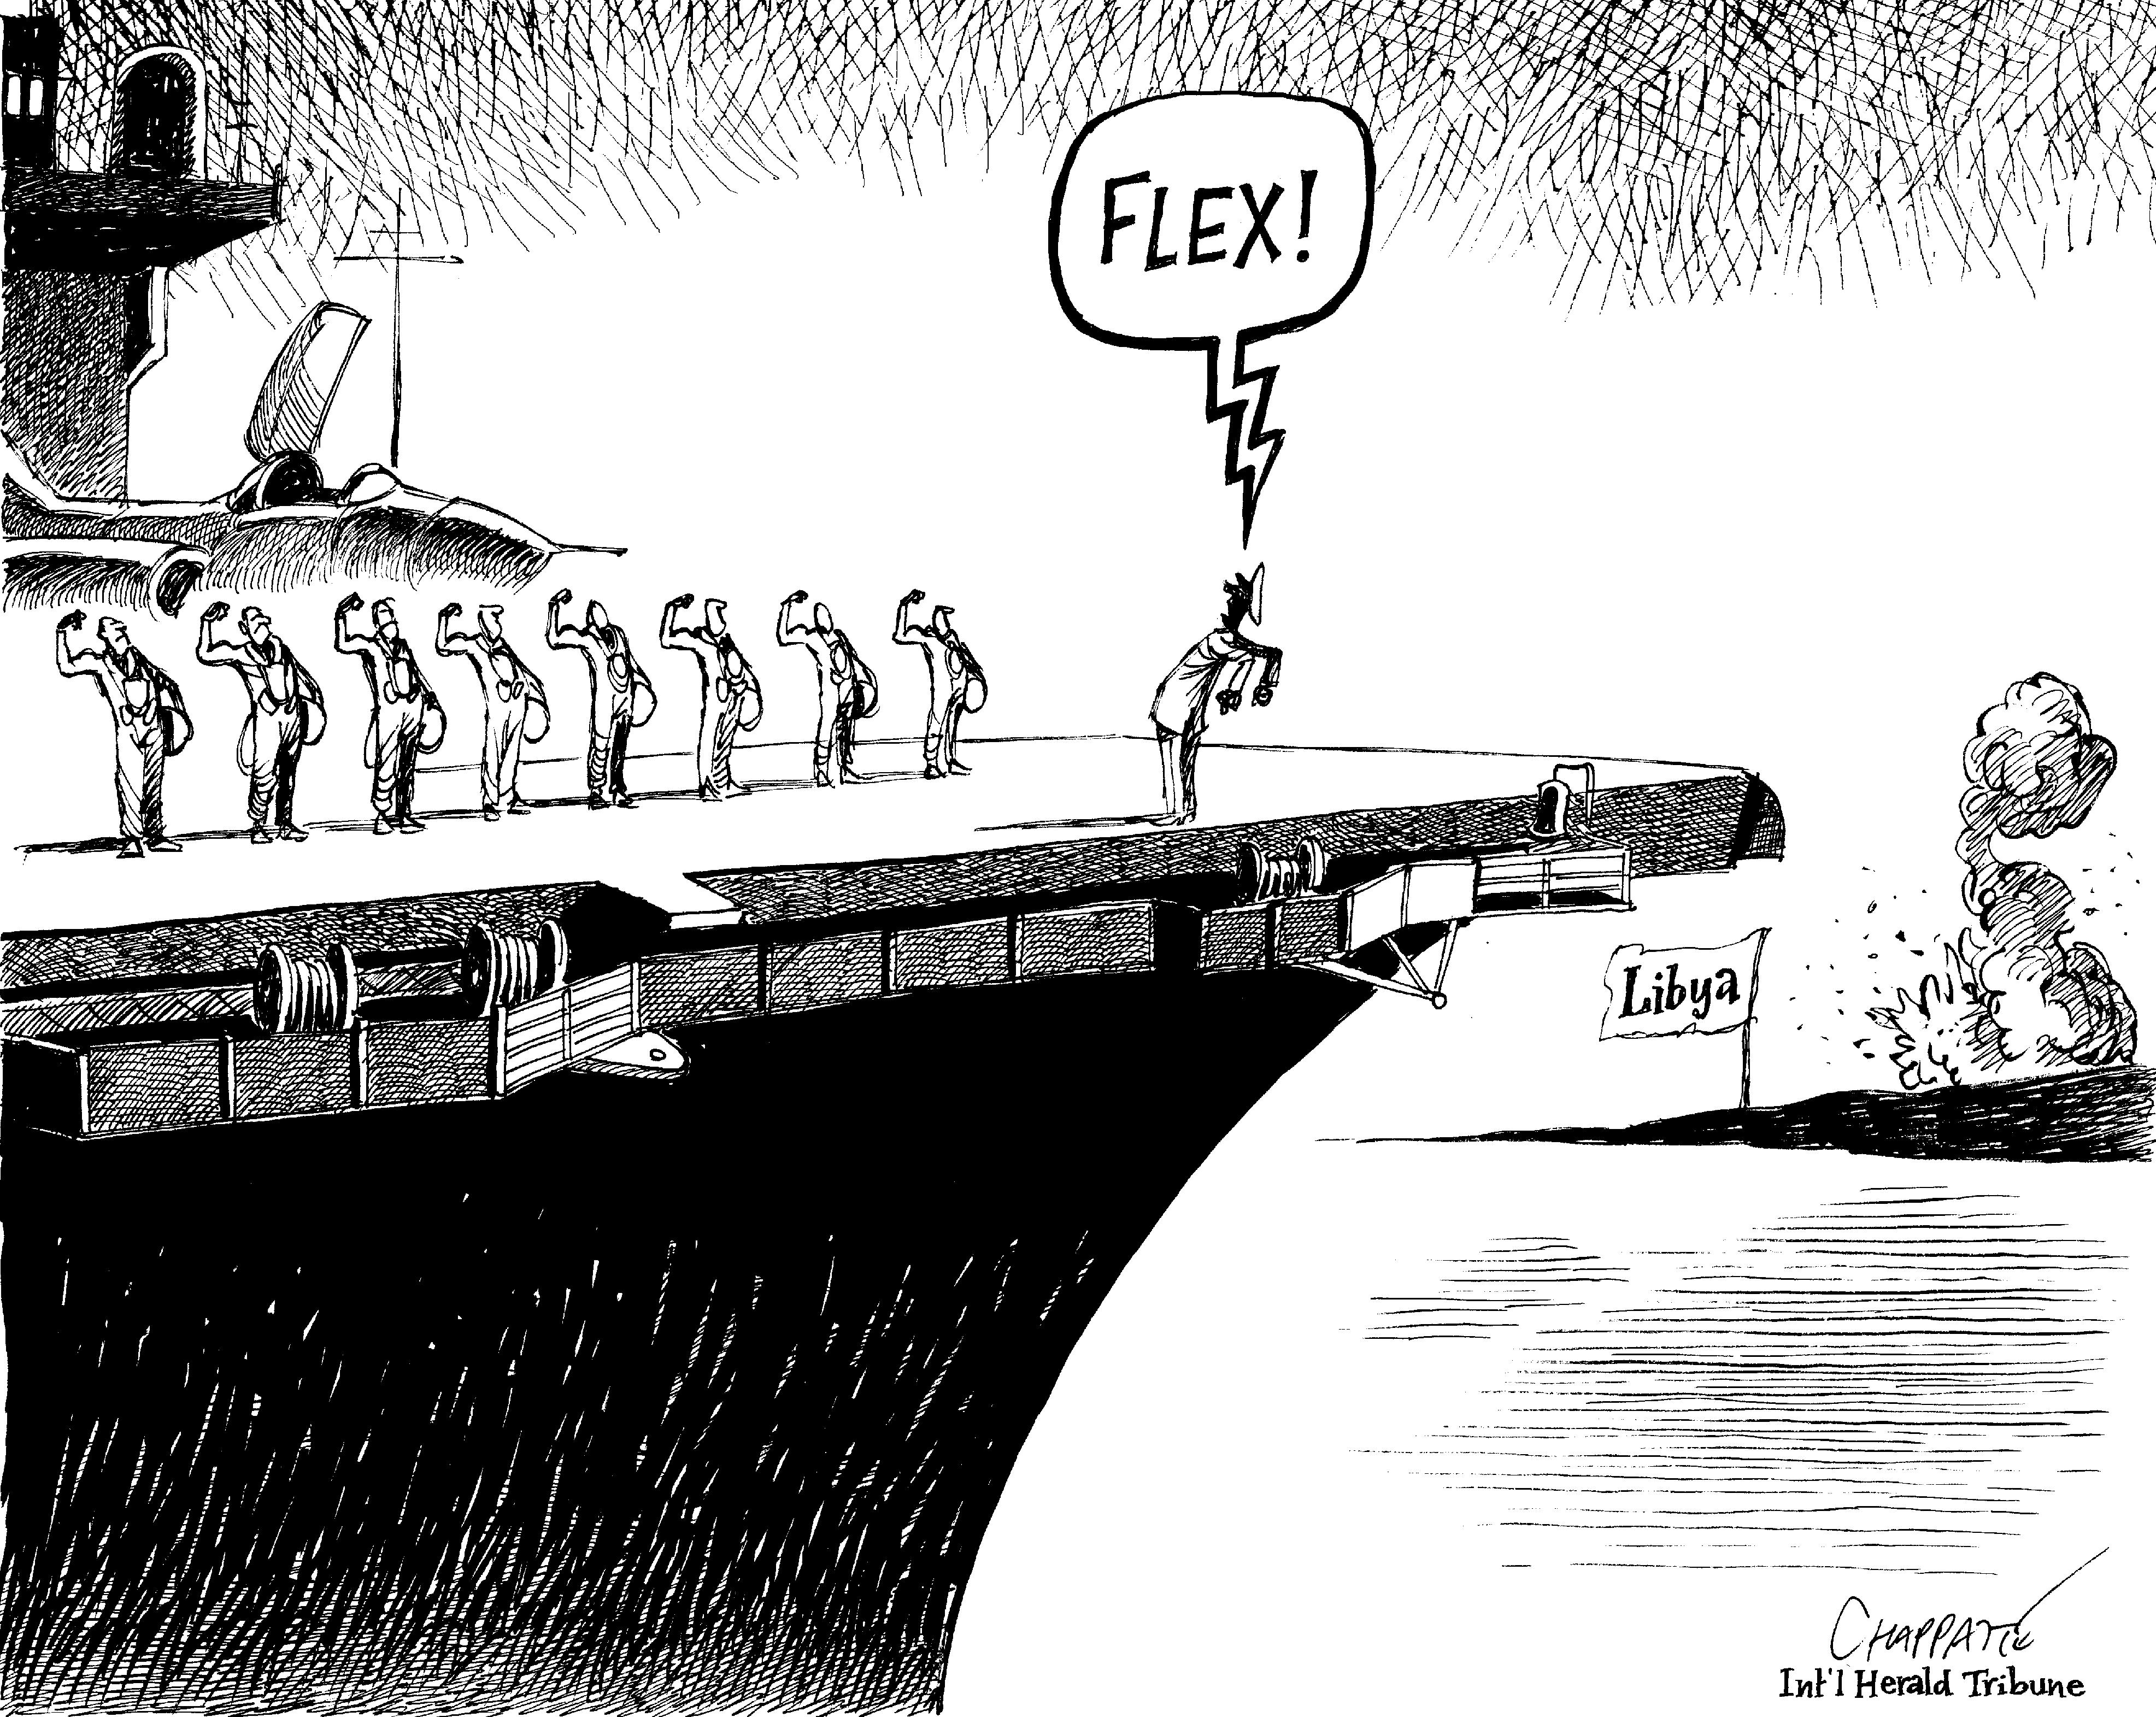 Military Flotilla Near Libya